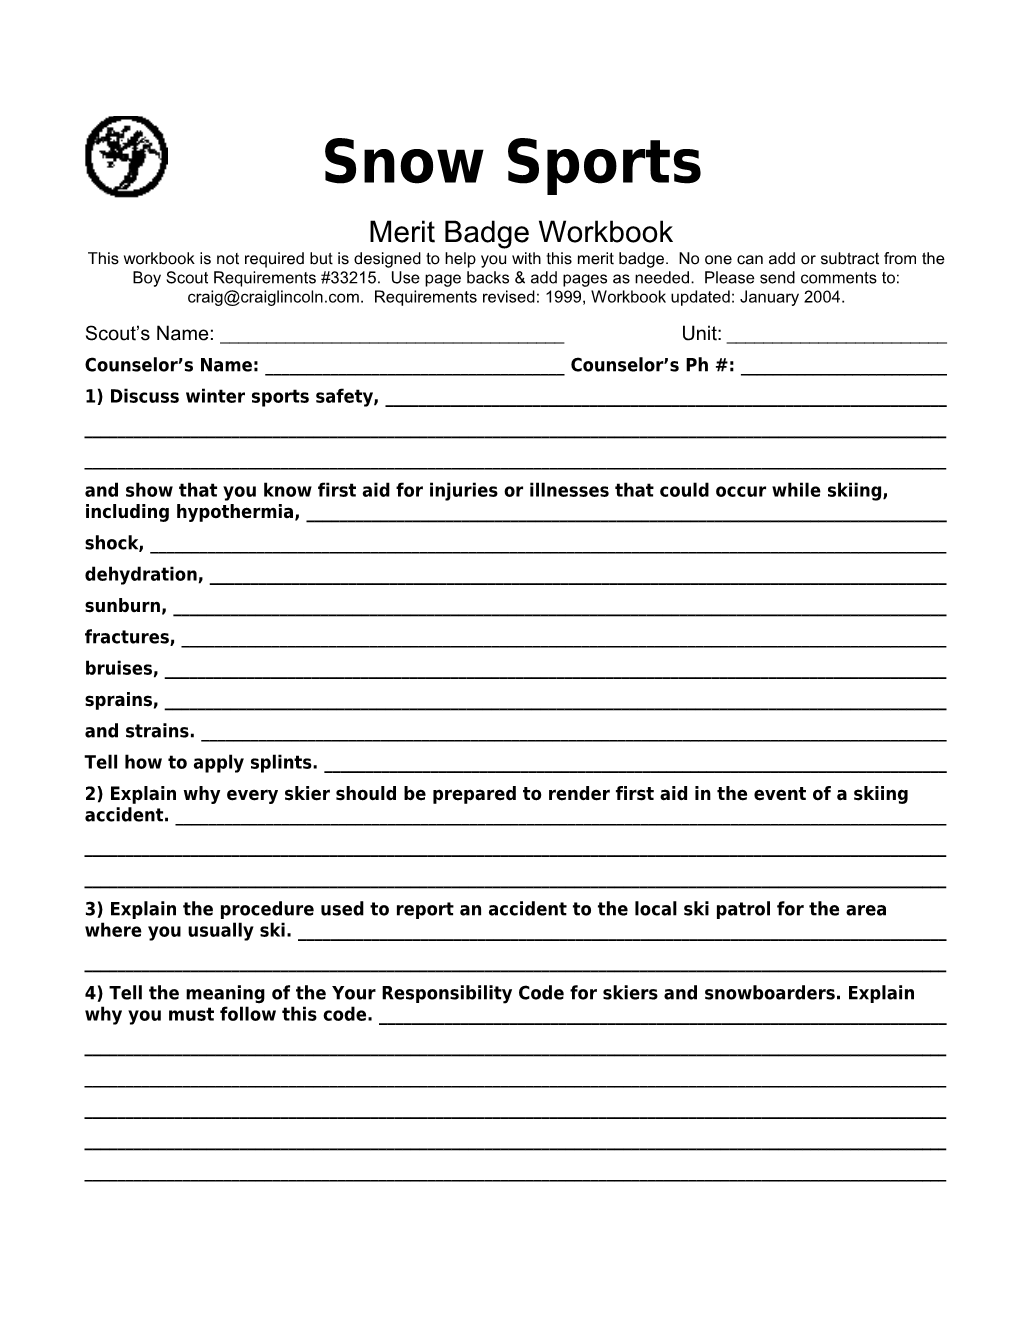 Snow Sports P. 1 Merit Badge Workbook Scout's Name: ______